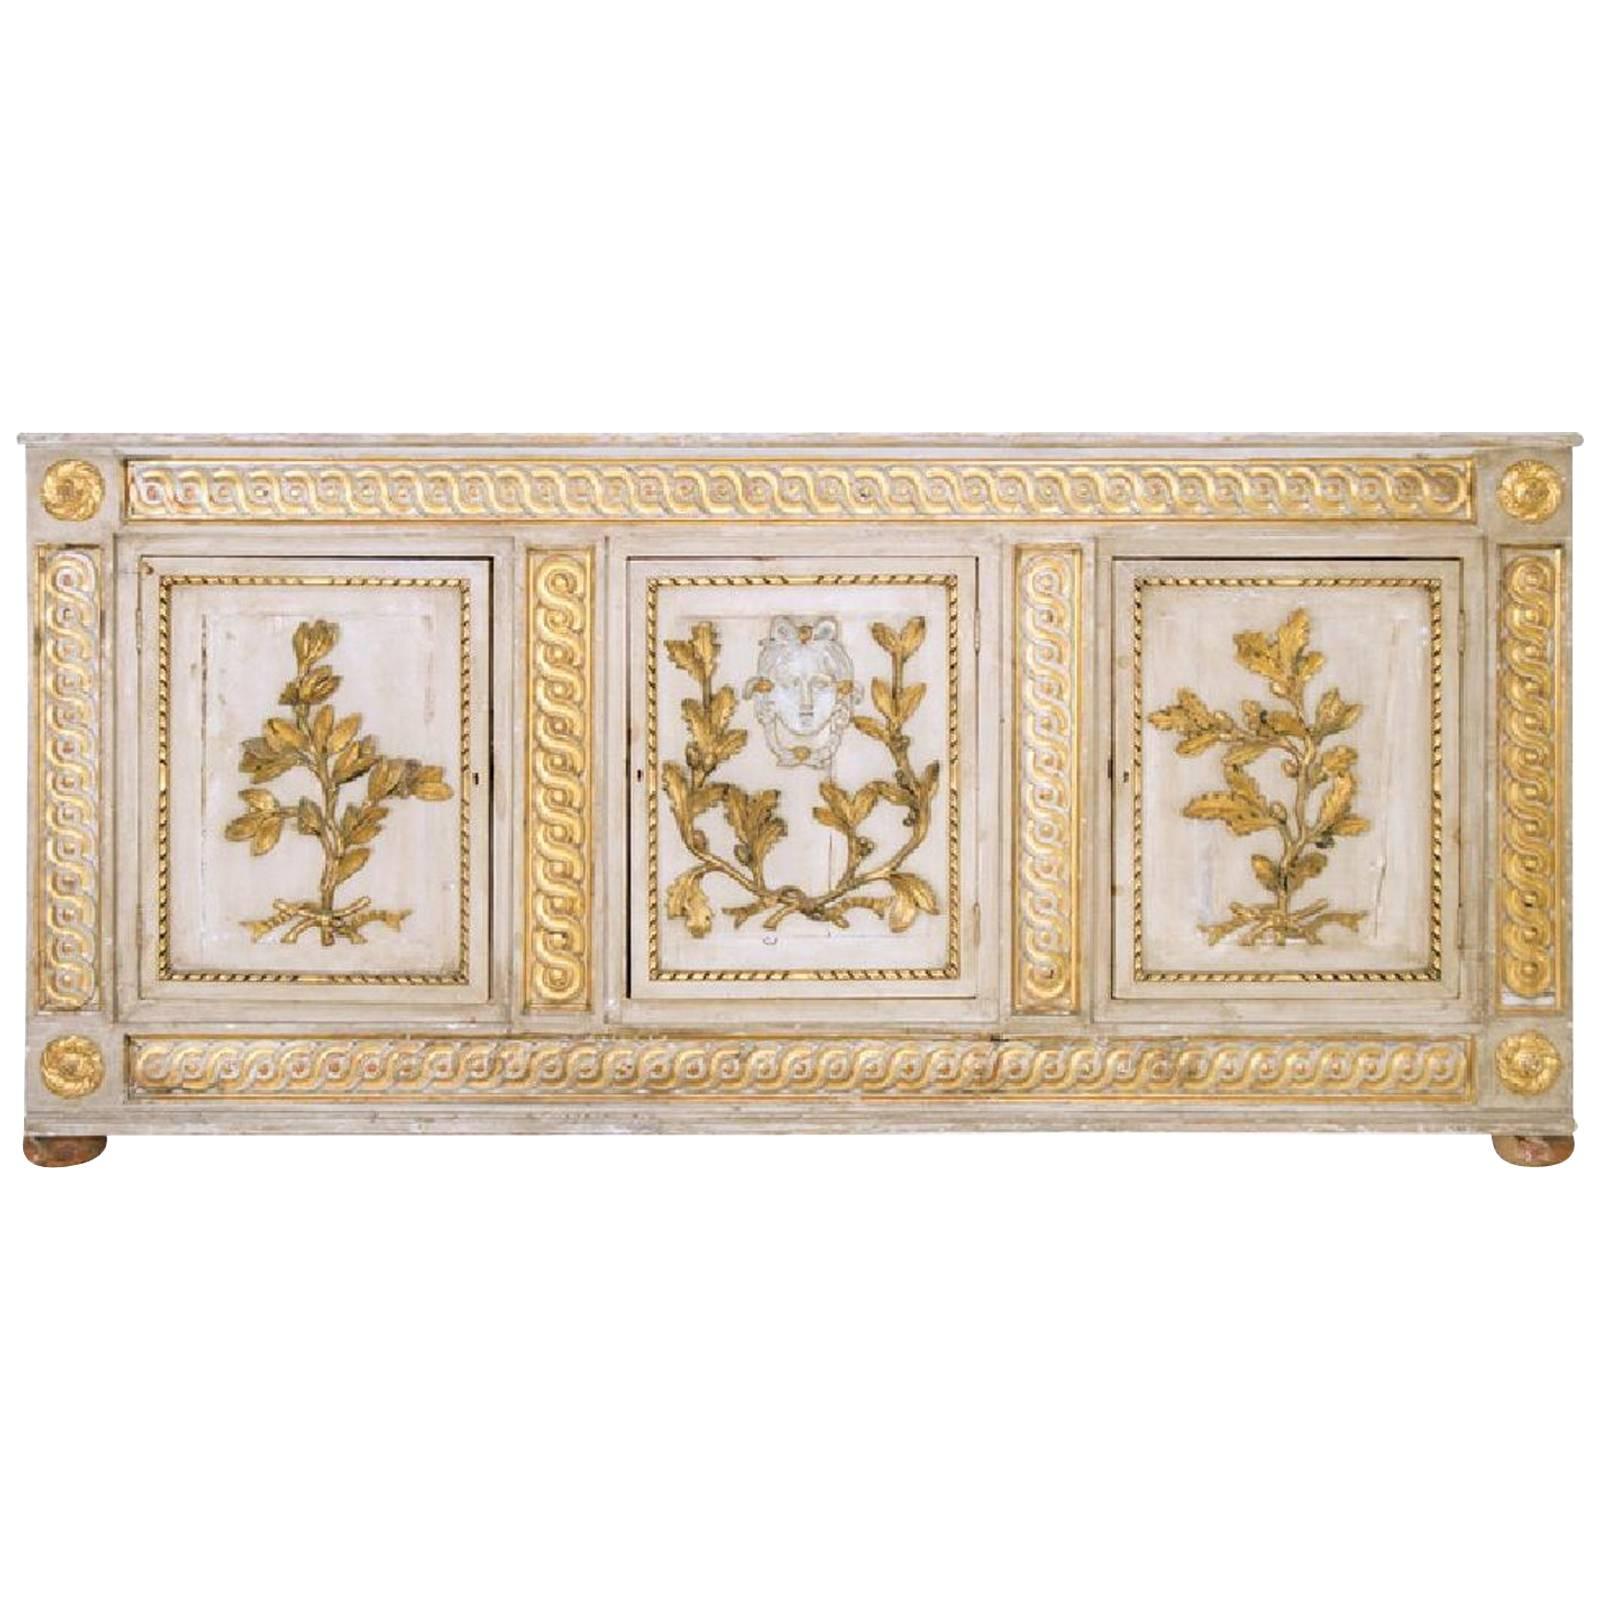 Period 18th Century Italian Neoclassical Sideboard Cabinet, Original Parcel-Gilt